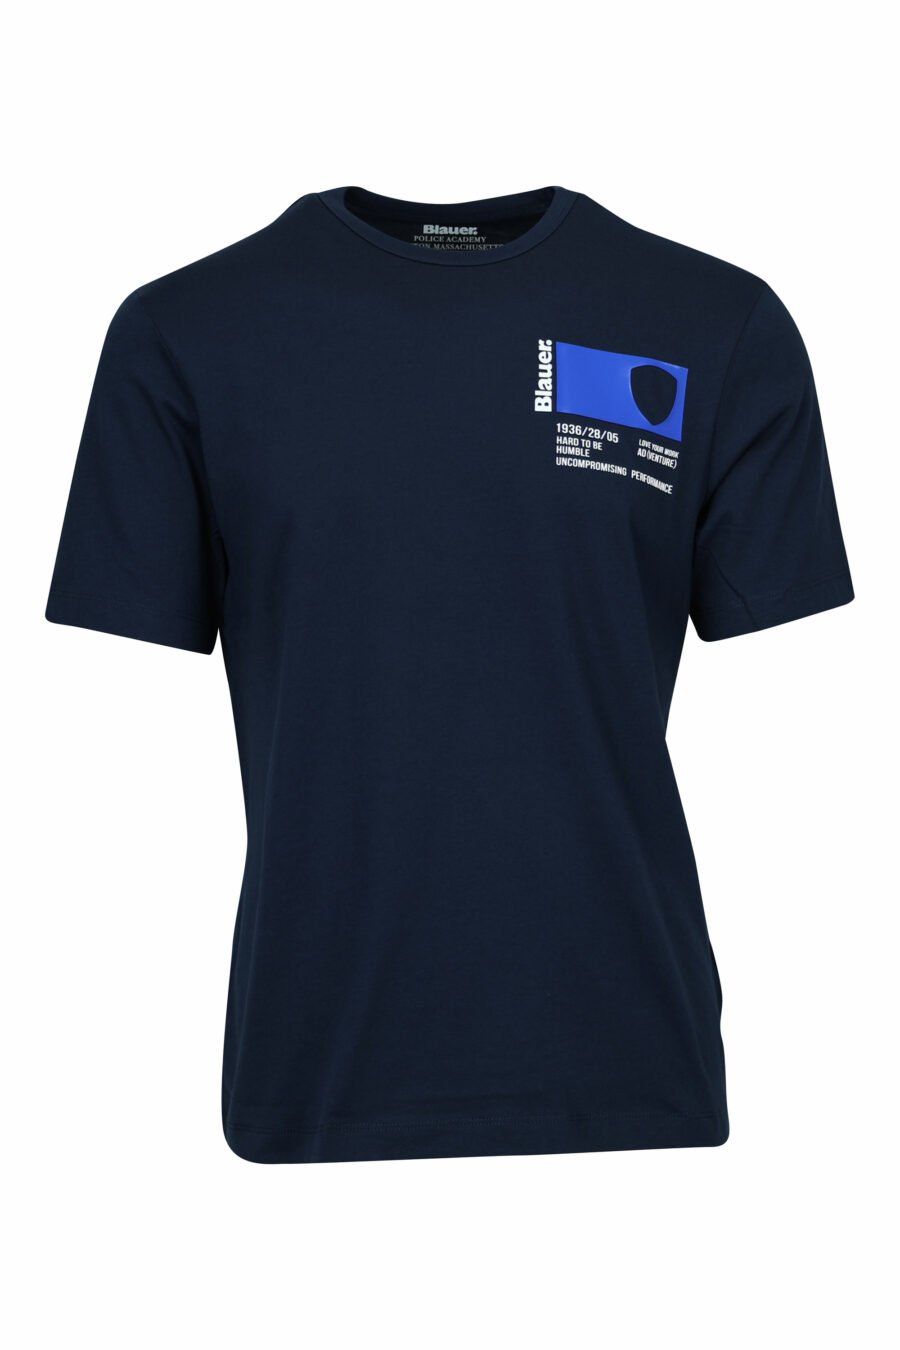 Camiseta azul con minilogo estampado bolsillo - 8058610799946